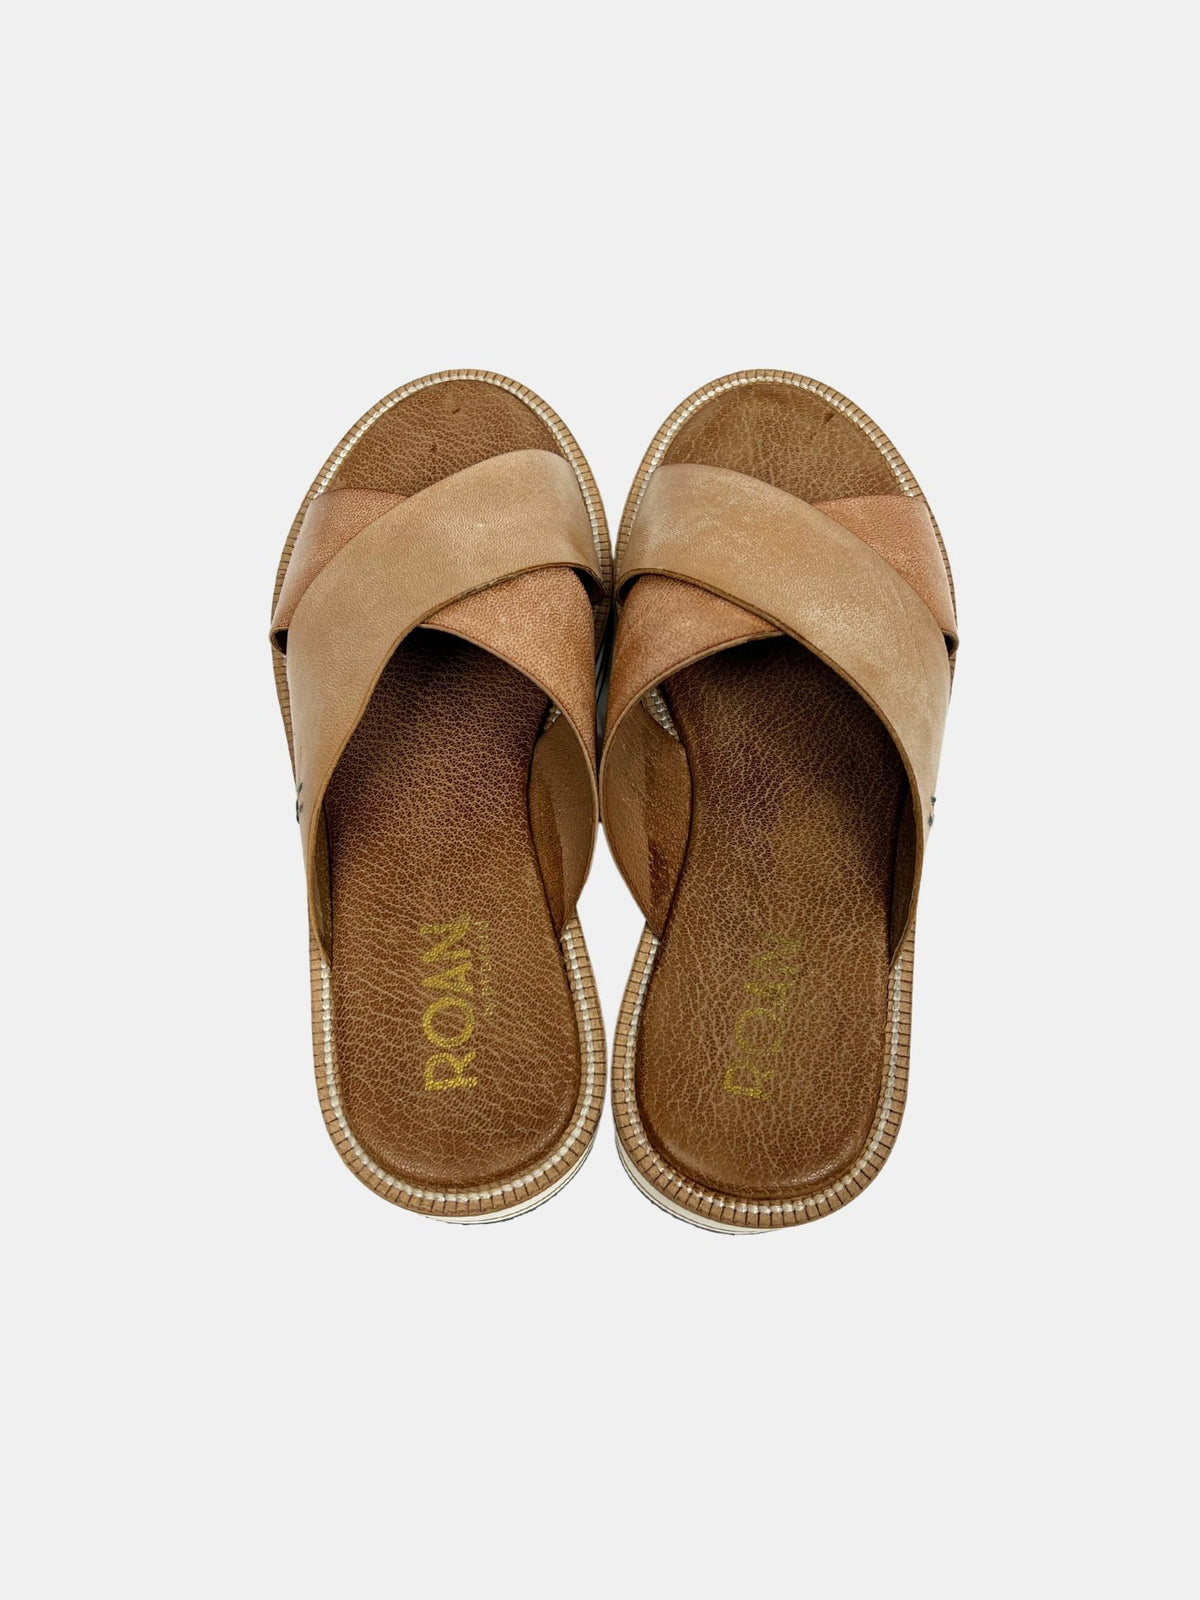 roan shout cross strap sandals in pecan white-top